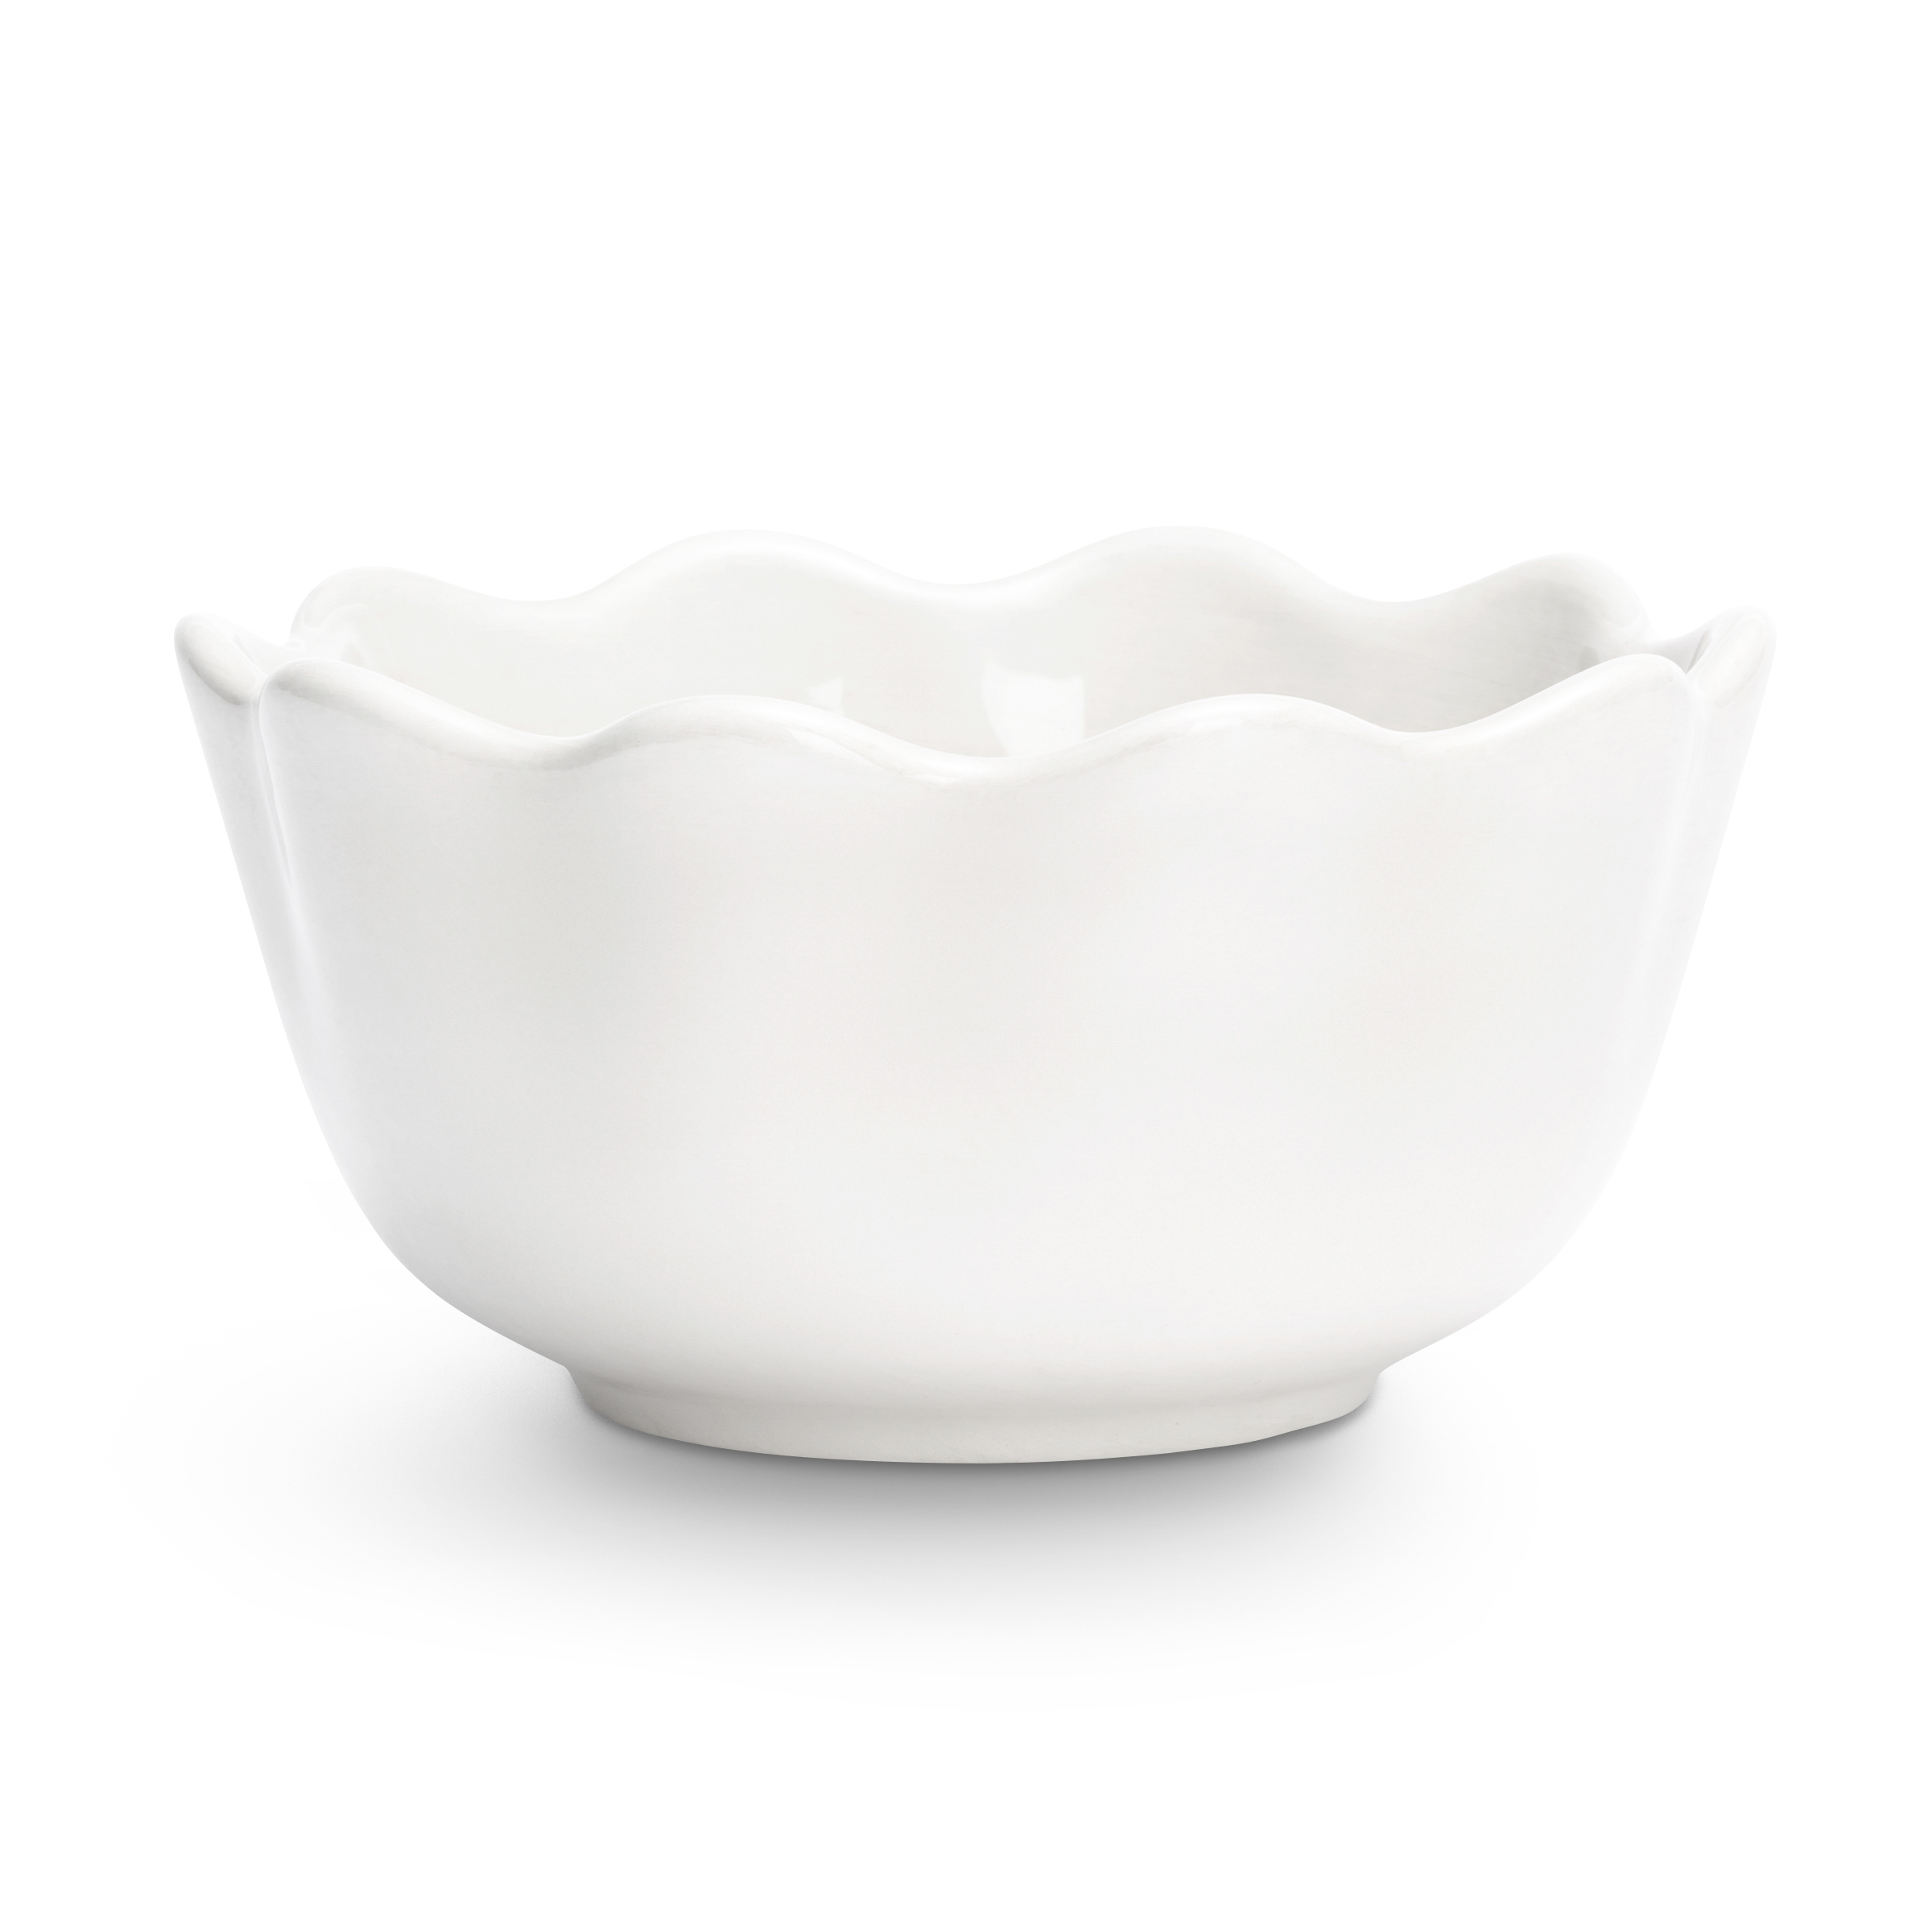 Butterfly bowl - Mateus  Bowl, Swedish design, Decorative items